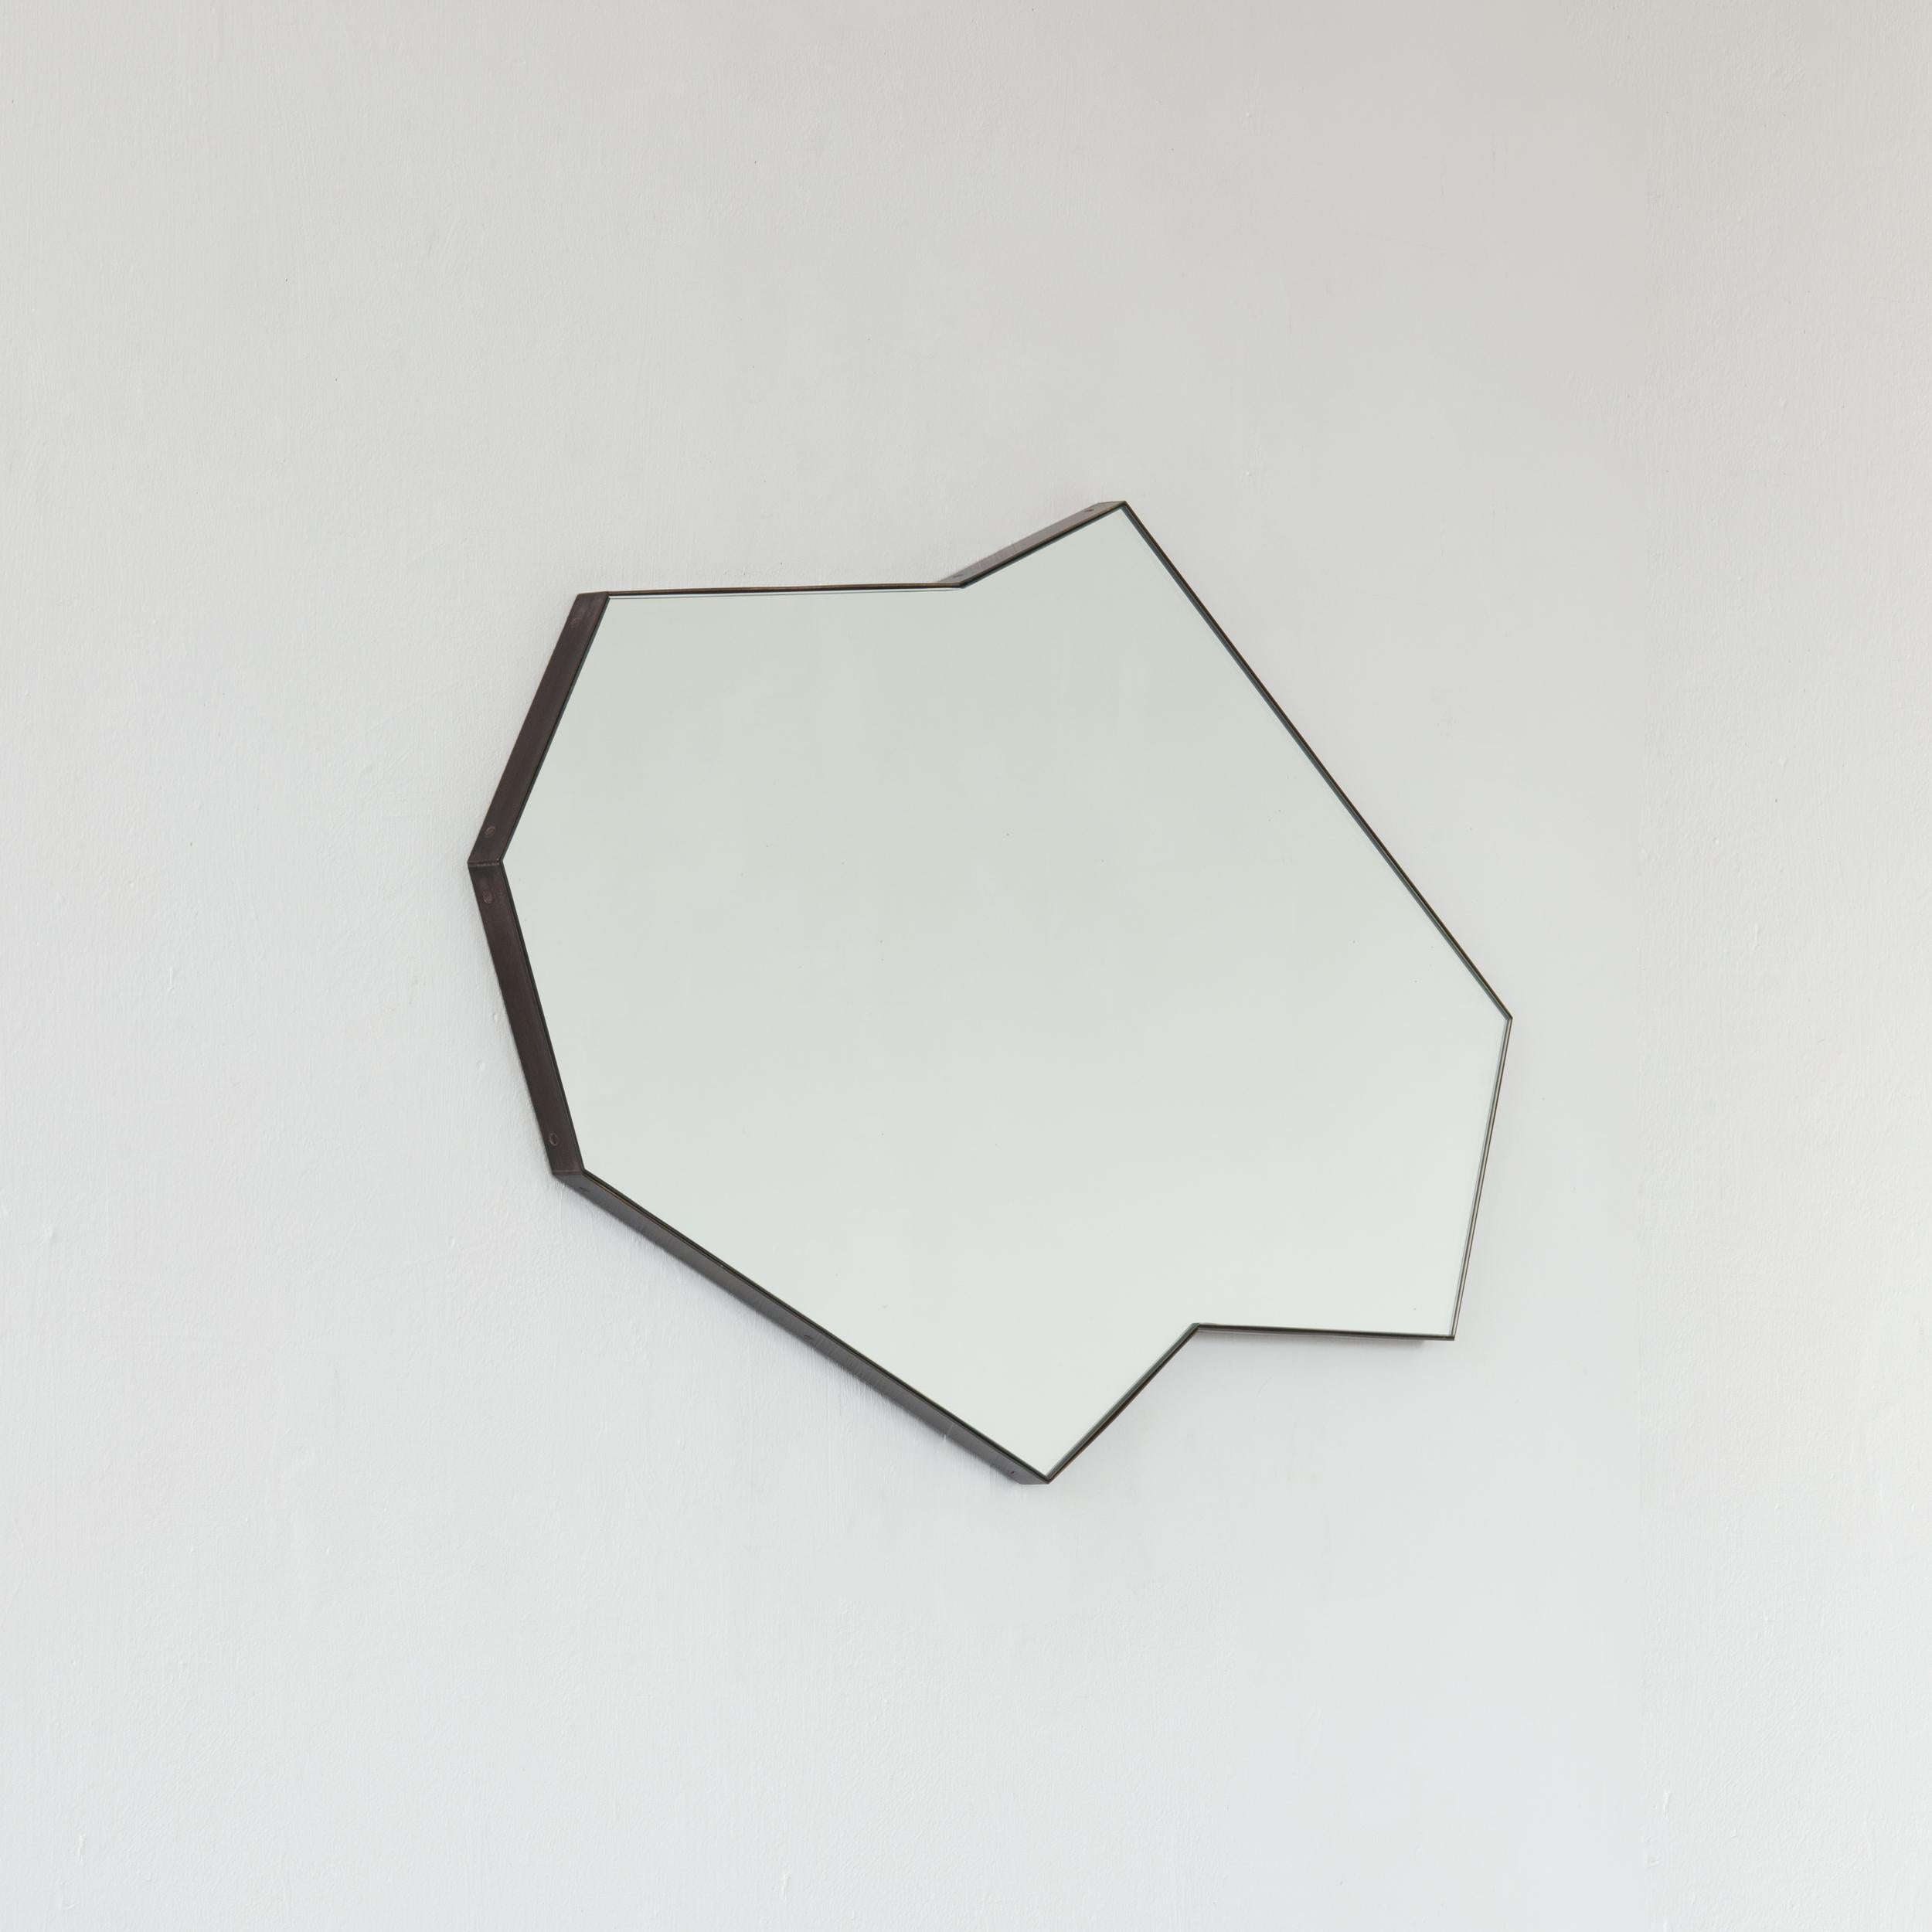 Octagon Bapa Irregular shaped Art Deco Mirror with Bronze Patina Frame For Sale 4